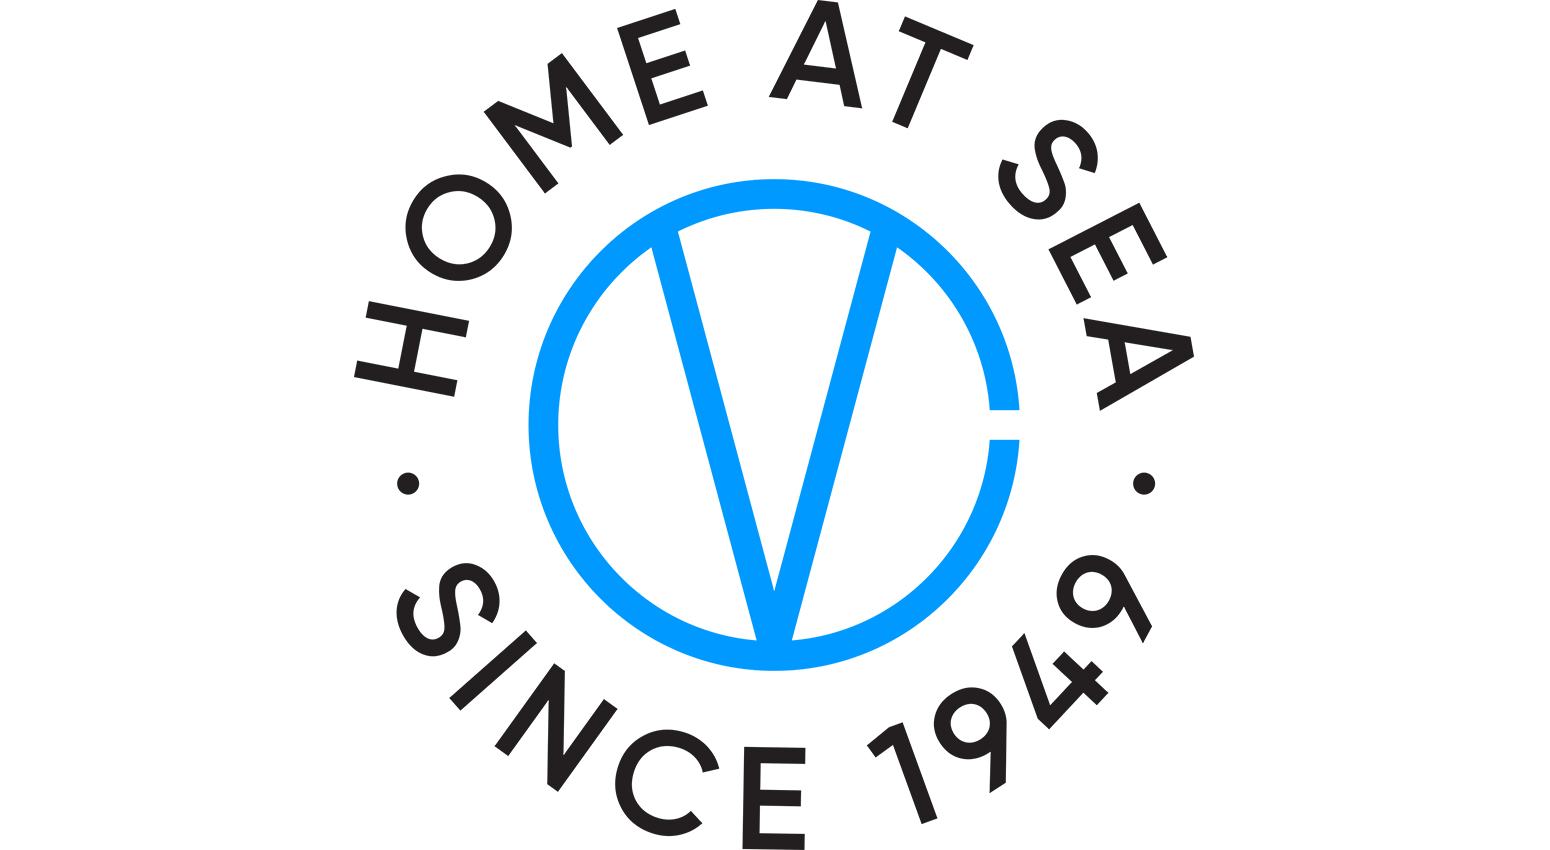 Variety Cruises logo "Home at sea since 1949"